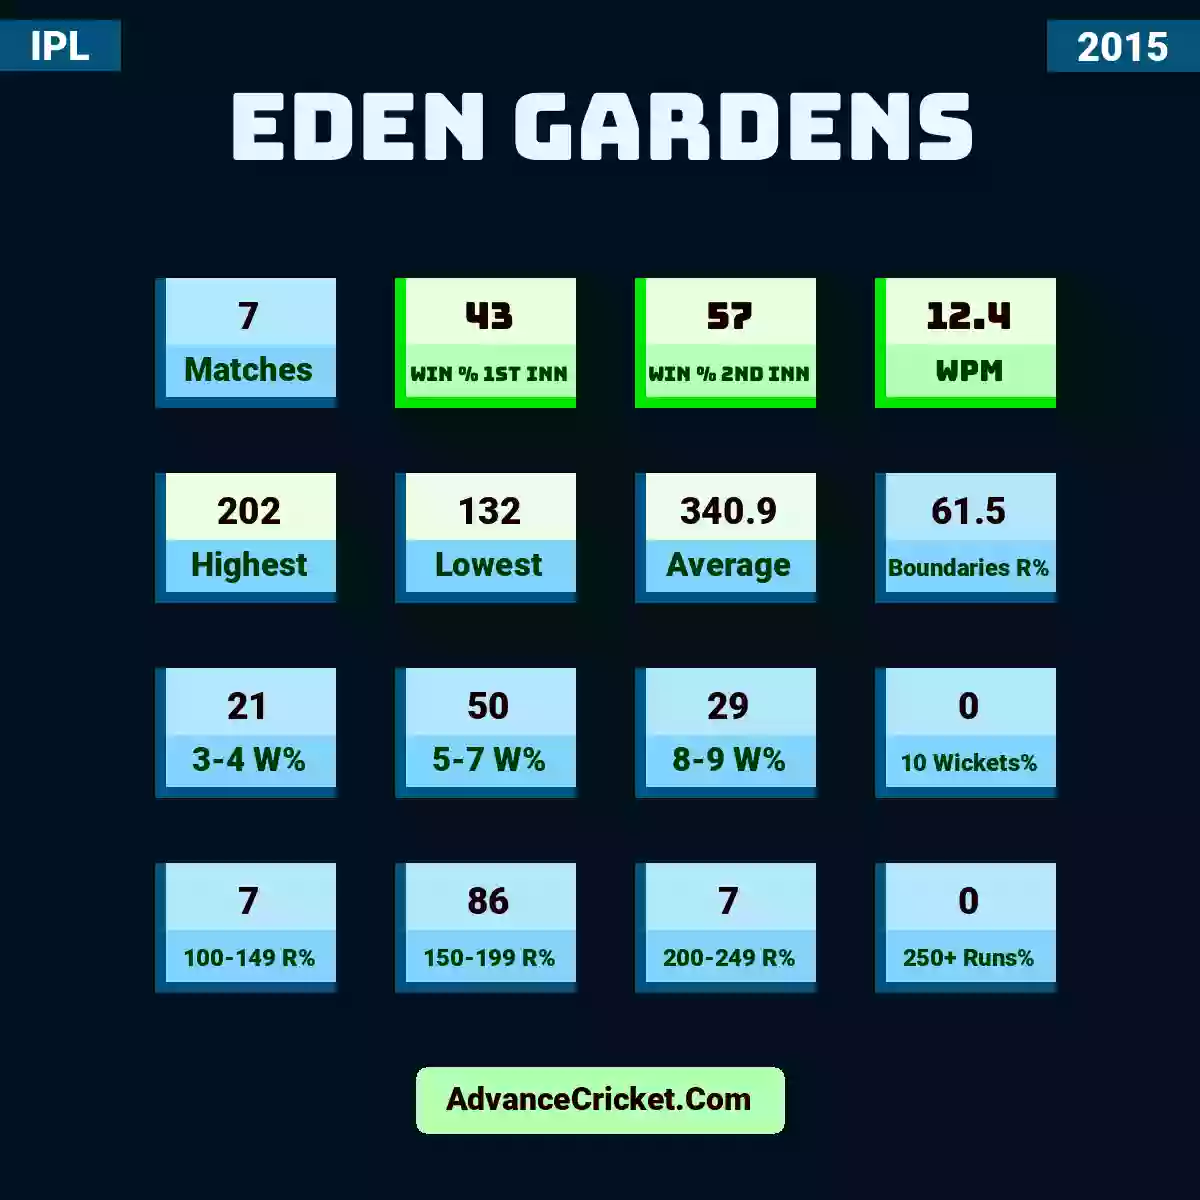 Image showing Eden Gardens with Matches: 7, Win % 1st Inn: 43, Win % 2nd Inn: 57, WPM: 12.4, Highest: 202, Lowest: 132, Average: 340.9, Boundaries R%: 61.5, 3-4 W%: 21, 5-7 W%: 50, 8-9 W%: 29, 10 Wickets%: 0, 100-149 R%: 7, 150-199 R%: 86, 200-249 R%: 7, 250+ Runs%: 0.